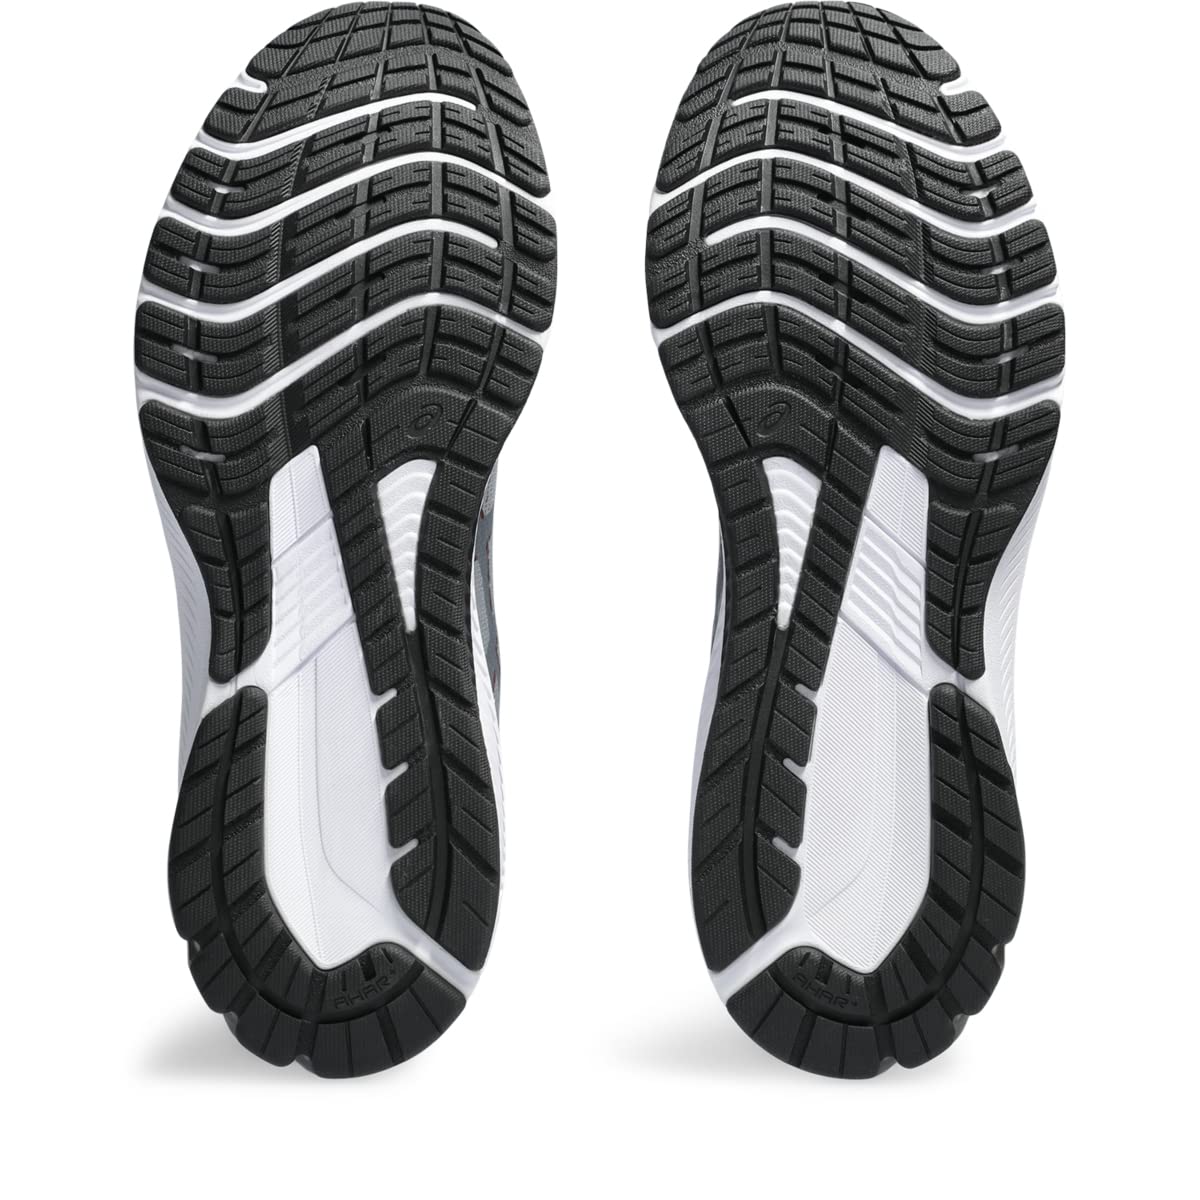 ASICS Men's GT-1000 12 Running Shoes